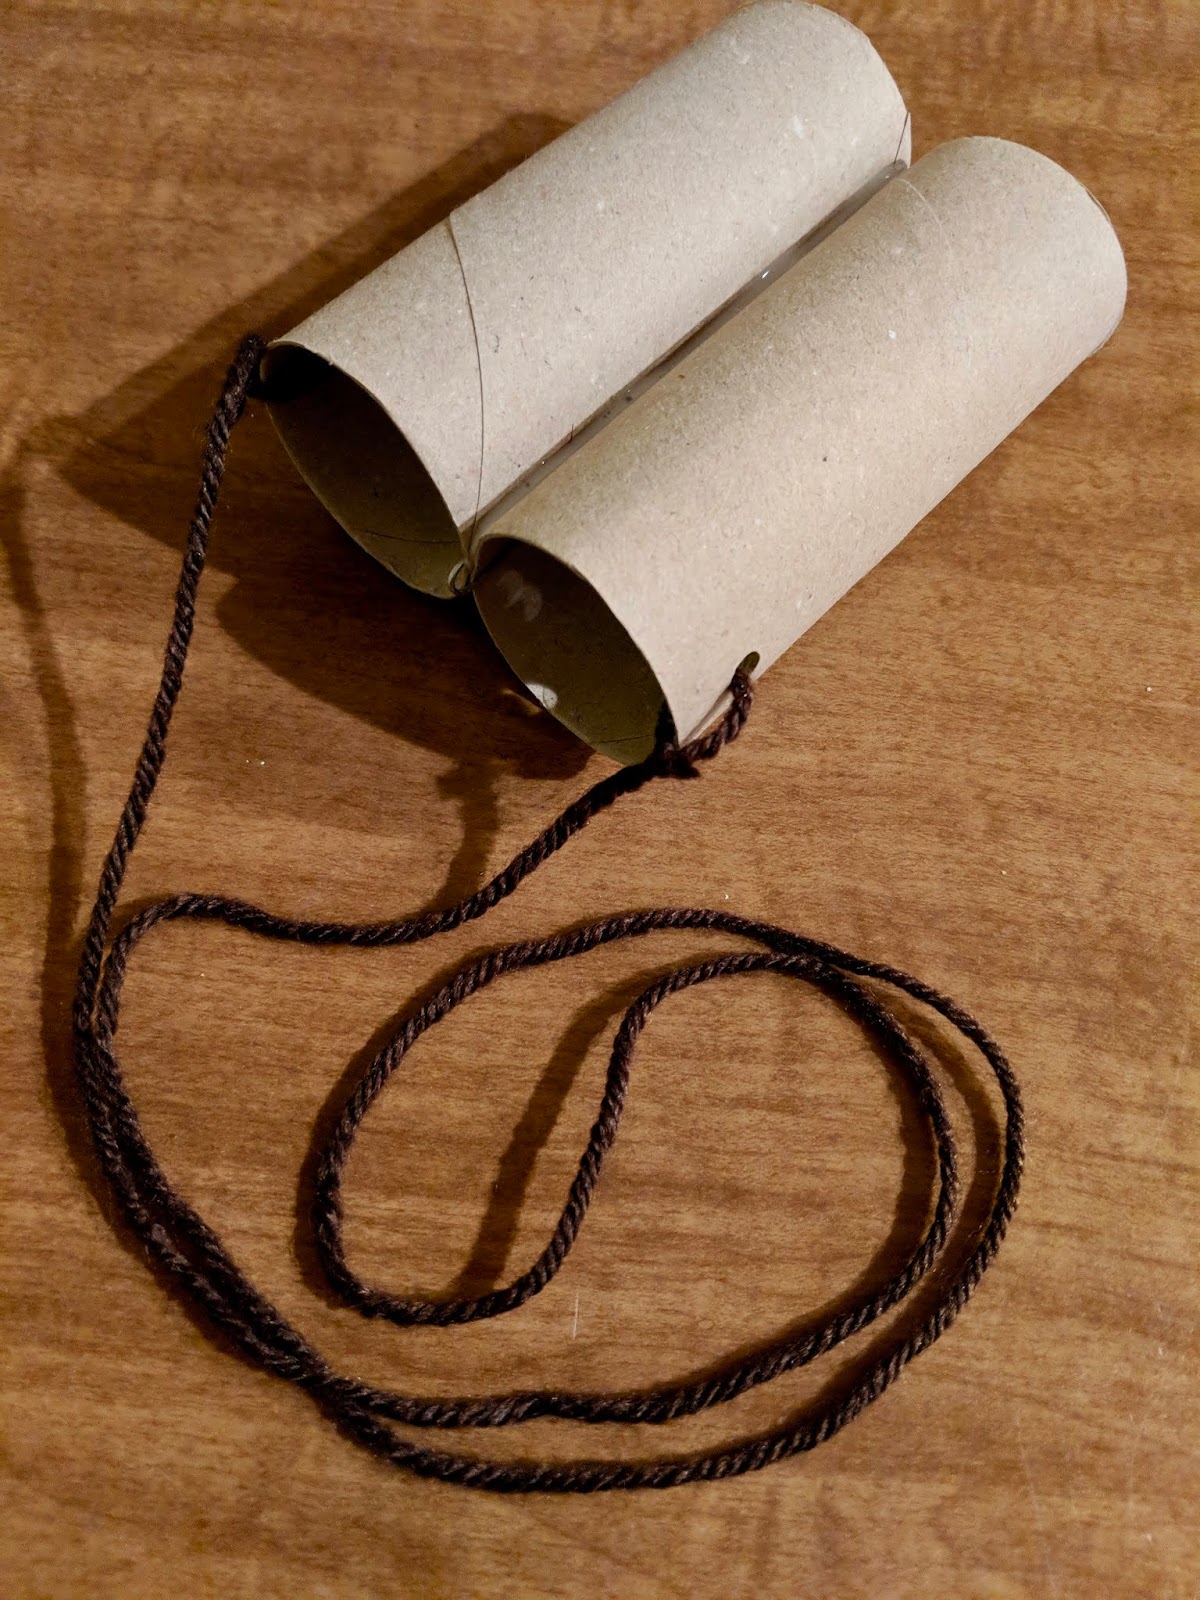 How to Make Toilet Paper Roll Binoculars